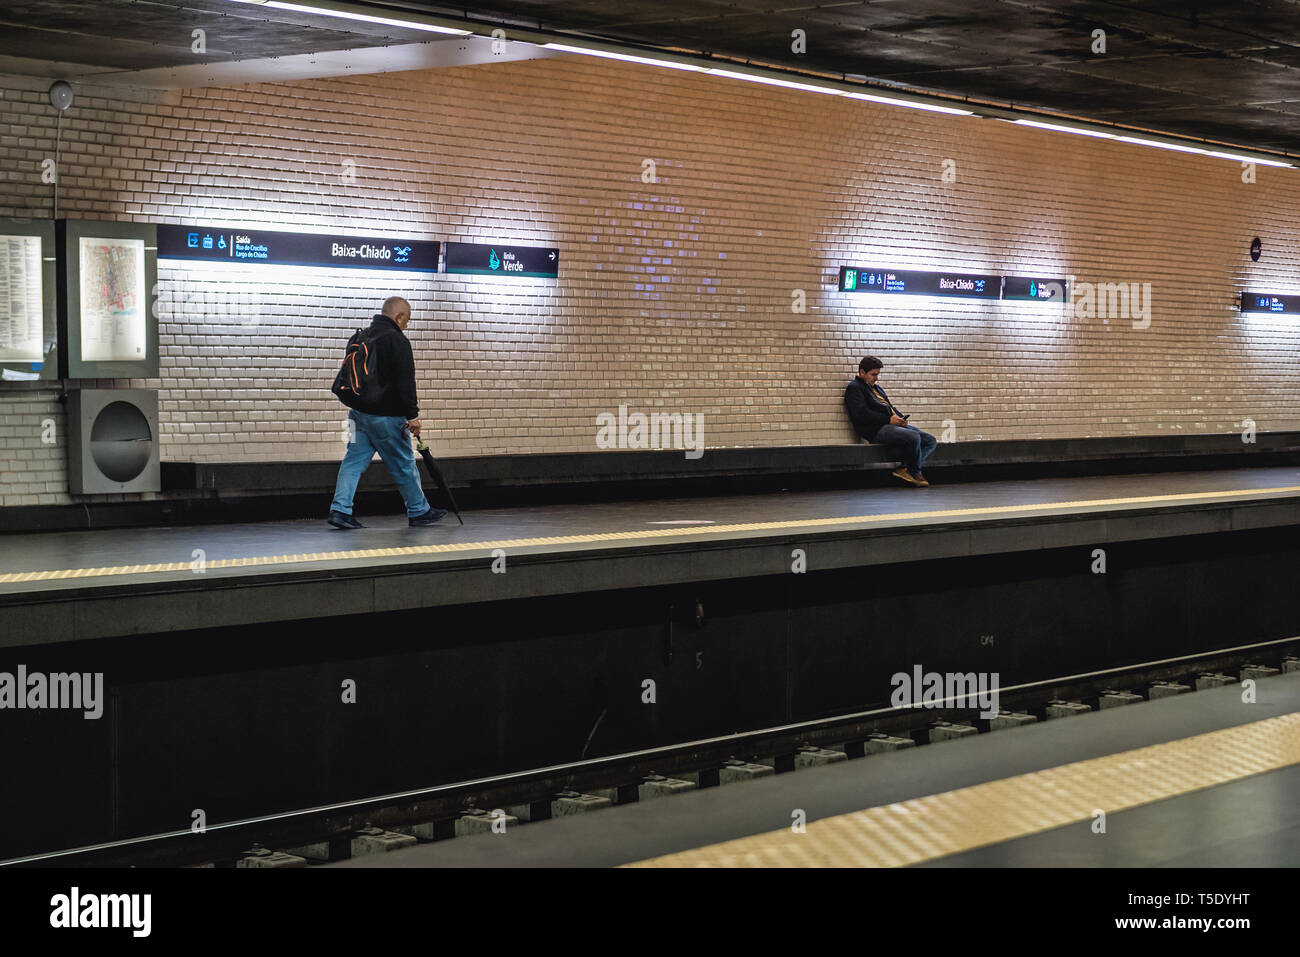 Baixa Chiado station of subway system in Lisbon, Portugal Stock Photo